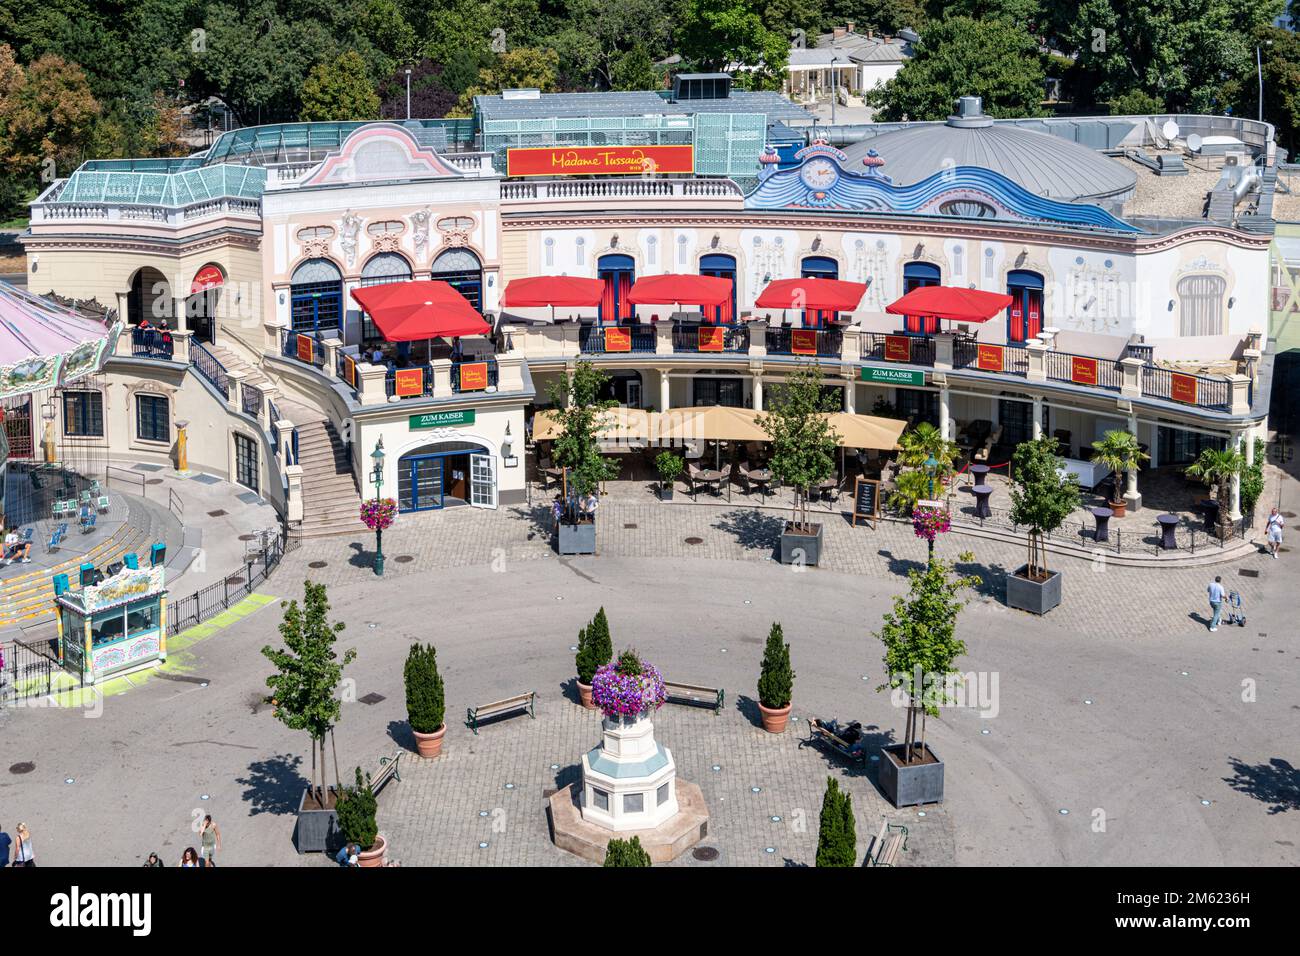 Prater amusement park viewed from the ferris wheel, Leopoldstadt, Vienna, Austria Stock Photo